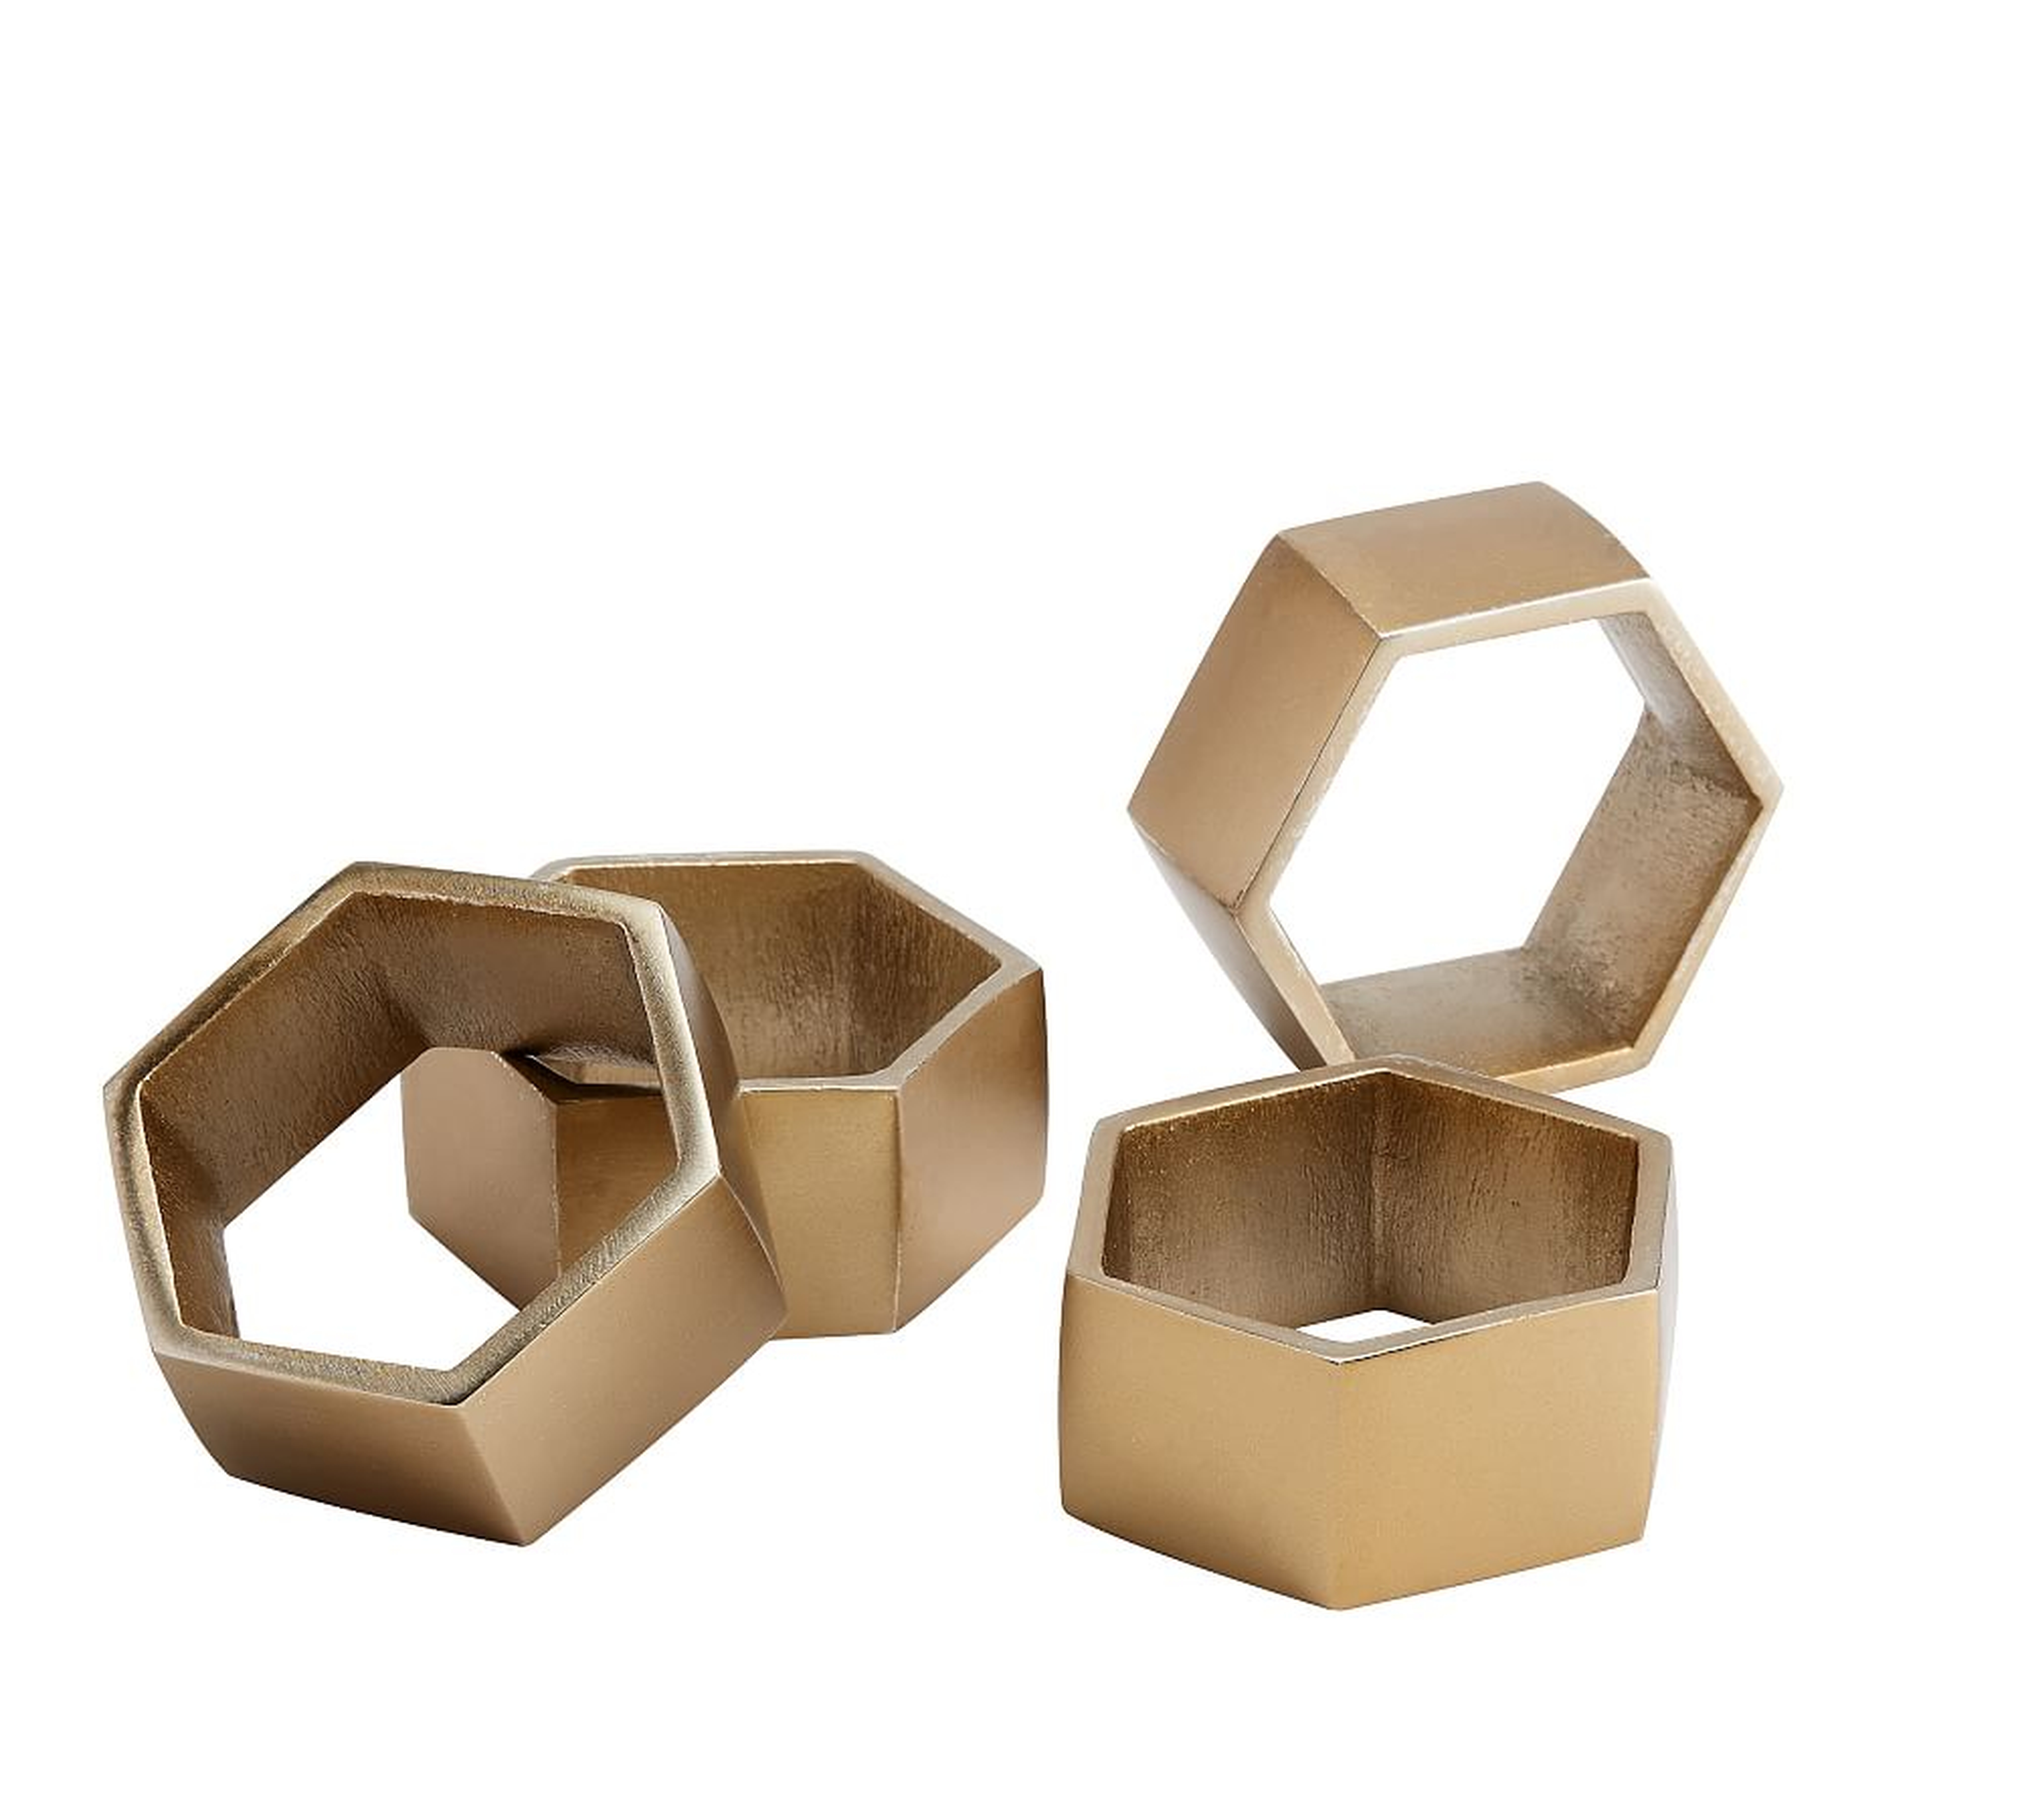 Bleecker Geo Metal Napkin Rings, Set of 4 - Gold - Pottery Barn